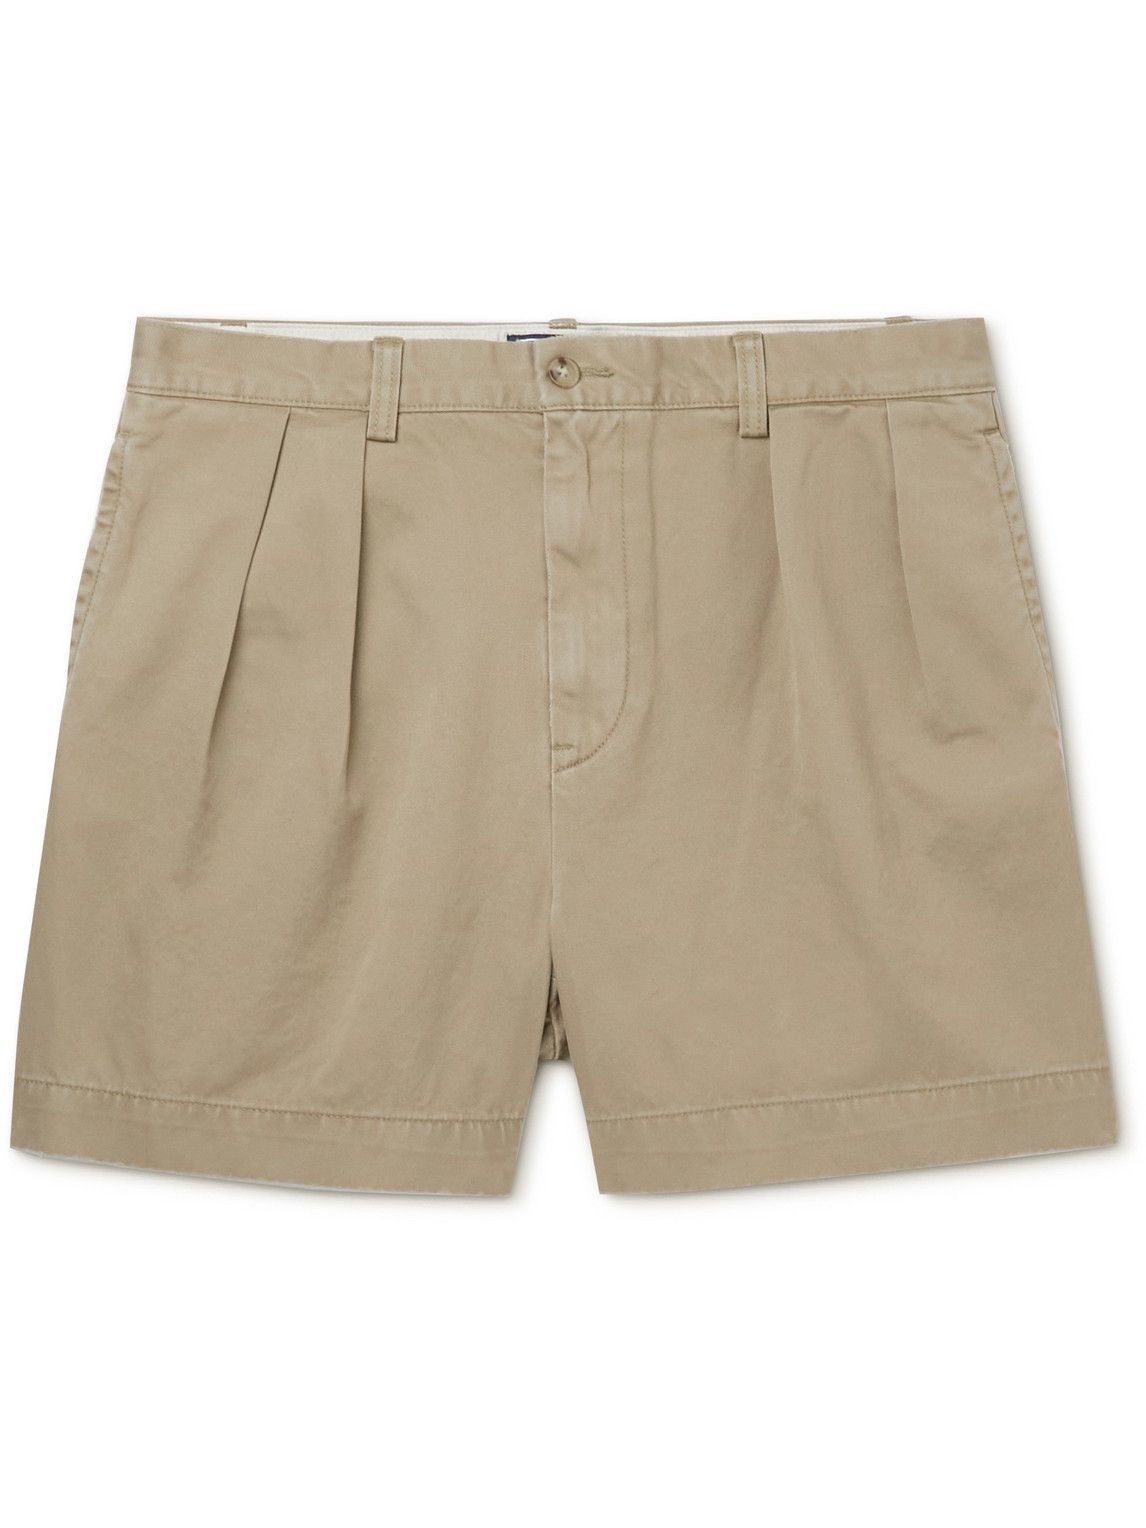 Polo Ralph Lauren - Cormac Straight-Leg Pleated Cotton-Twill Shorts - Neutrals